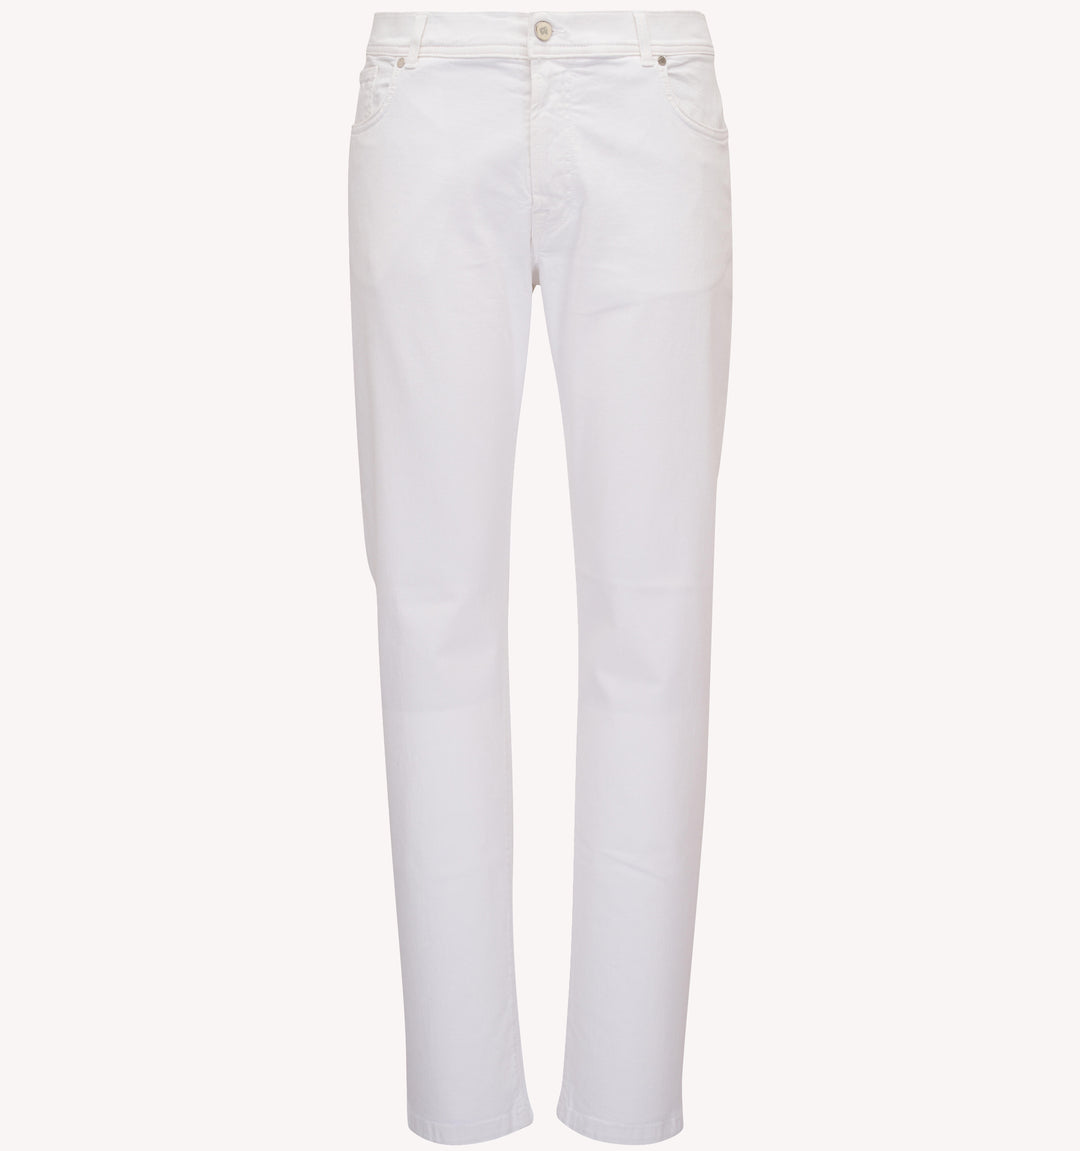 Pescarolo 5-Pocket Jean in White